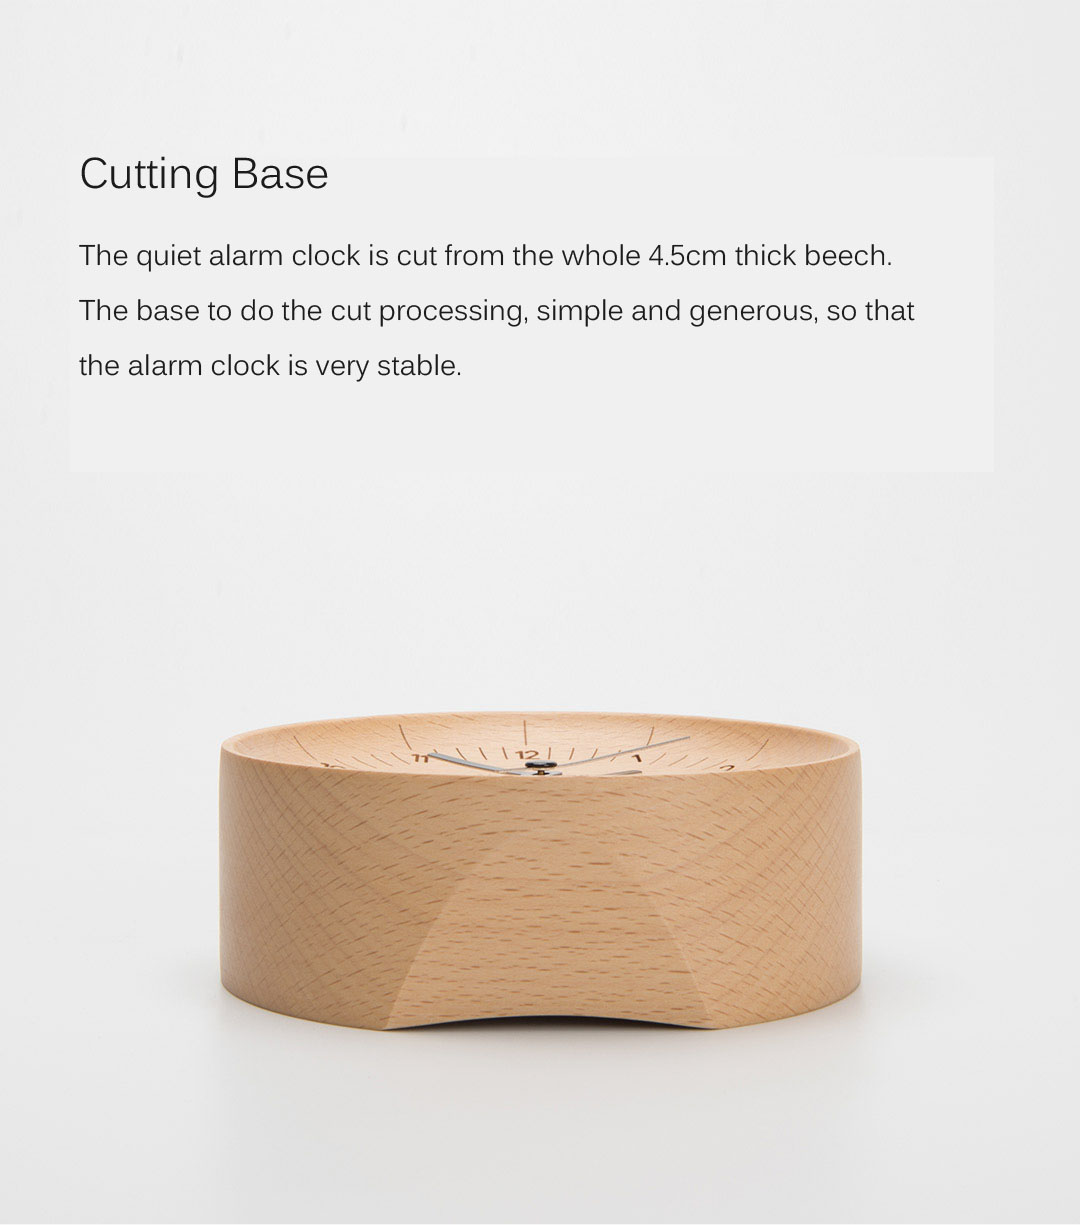 xiaomi beladesign about time german beech wood bedside alarm clock